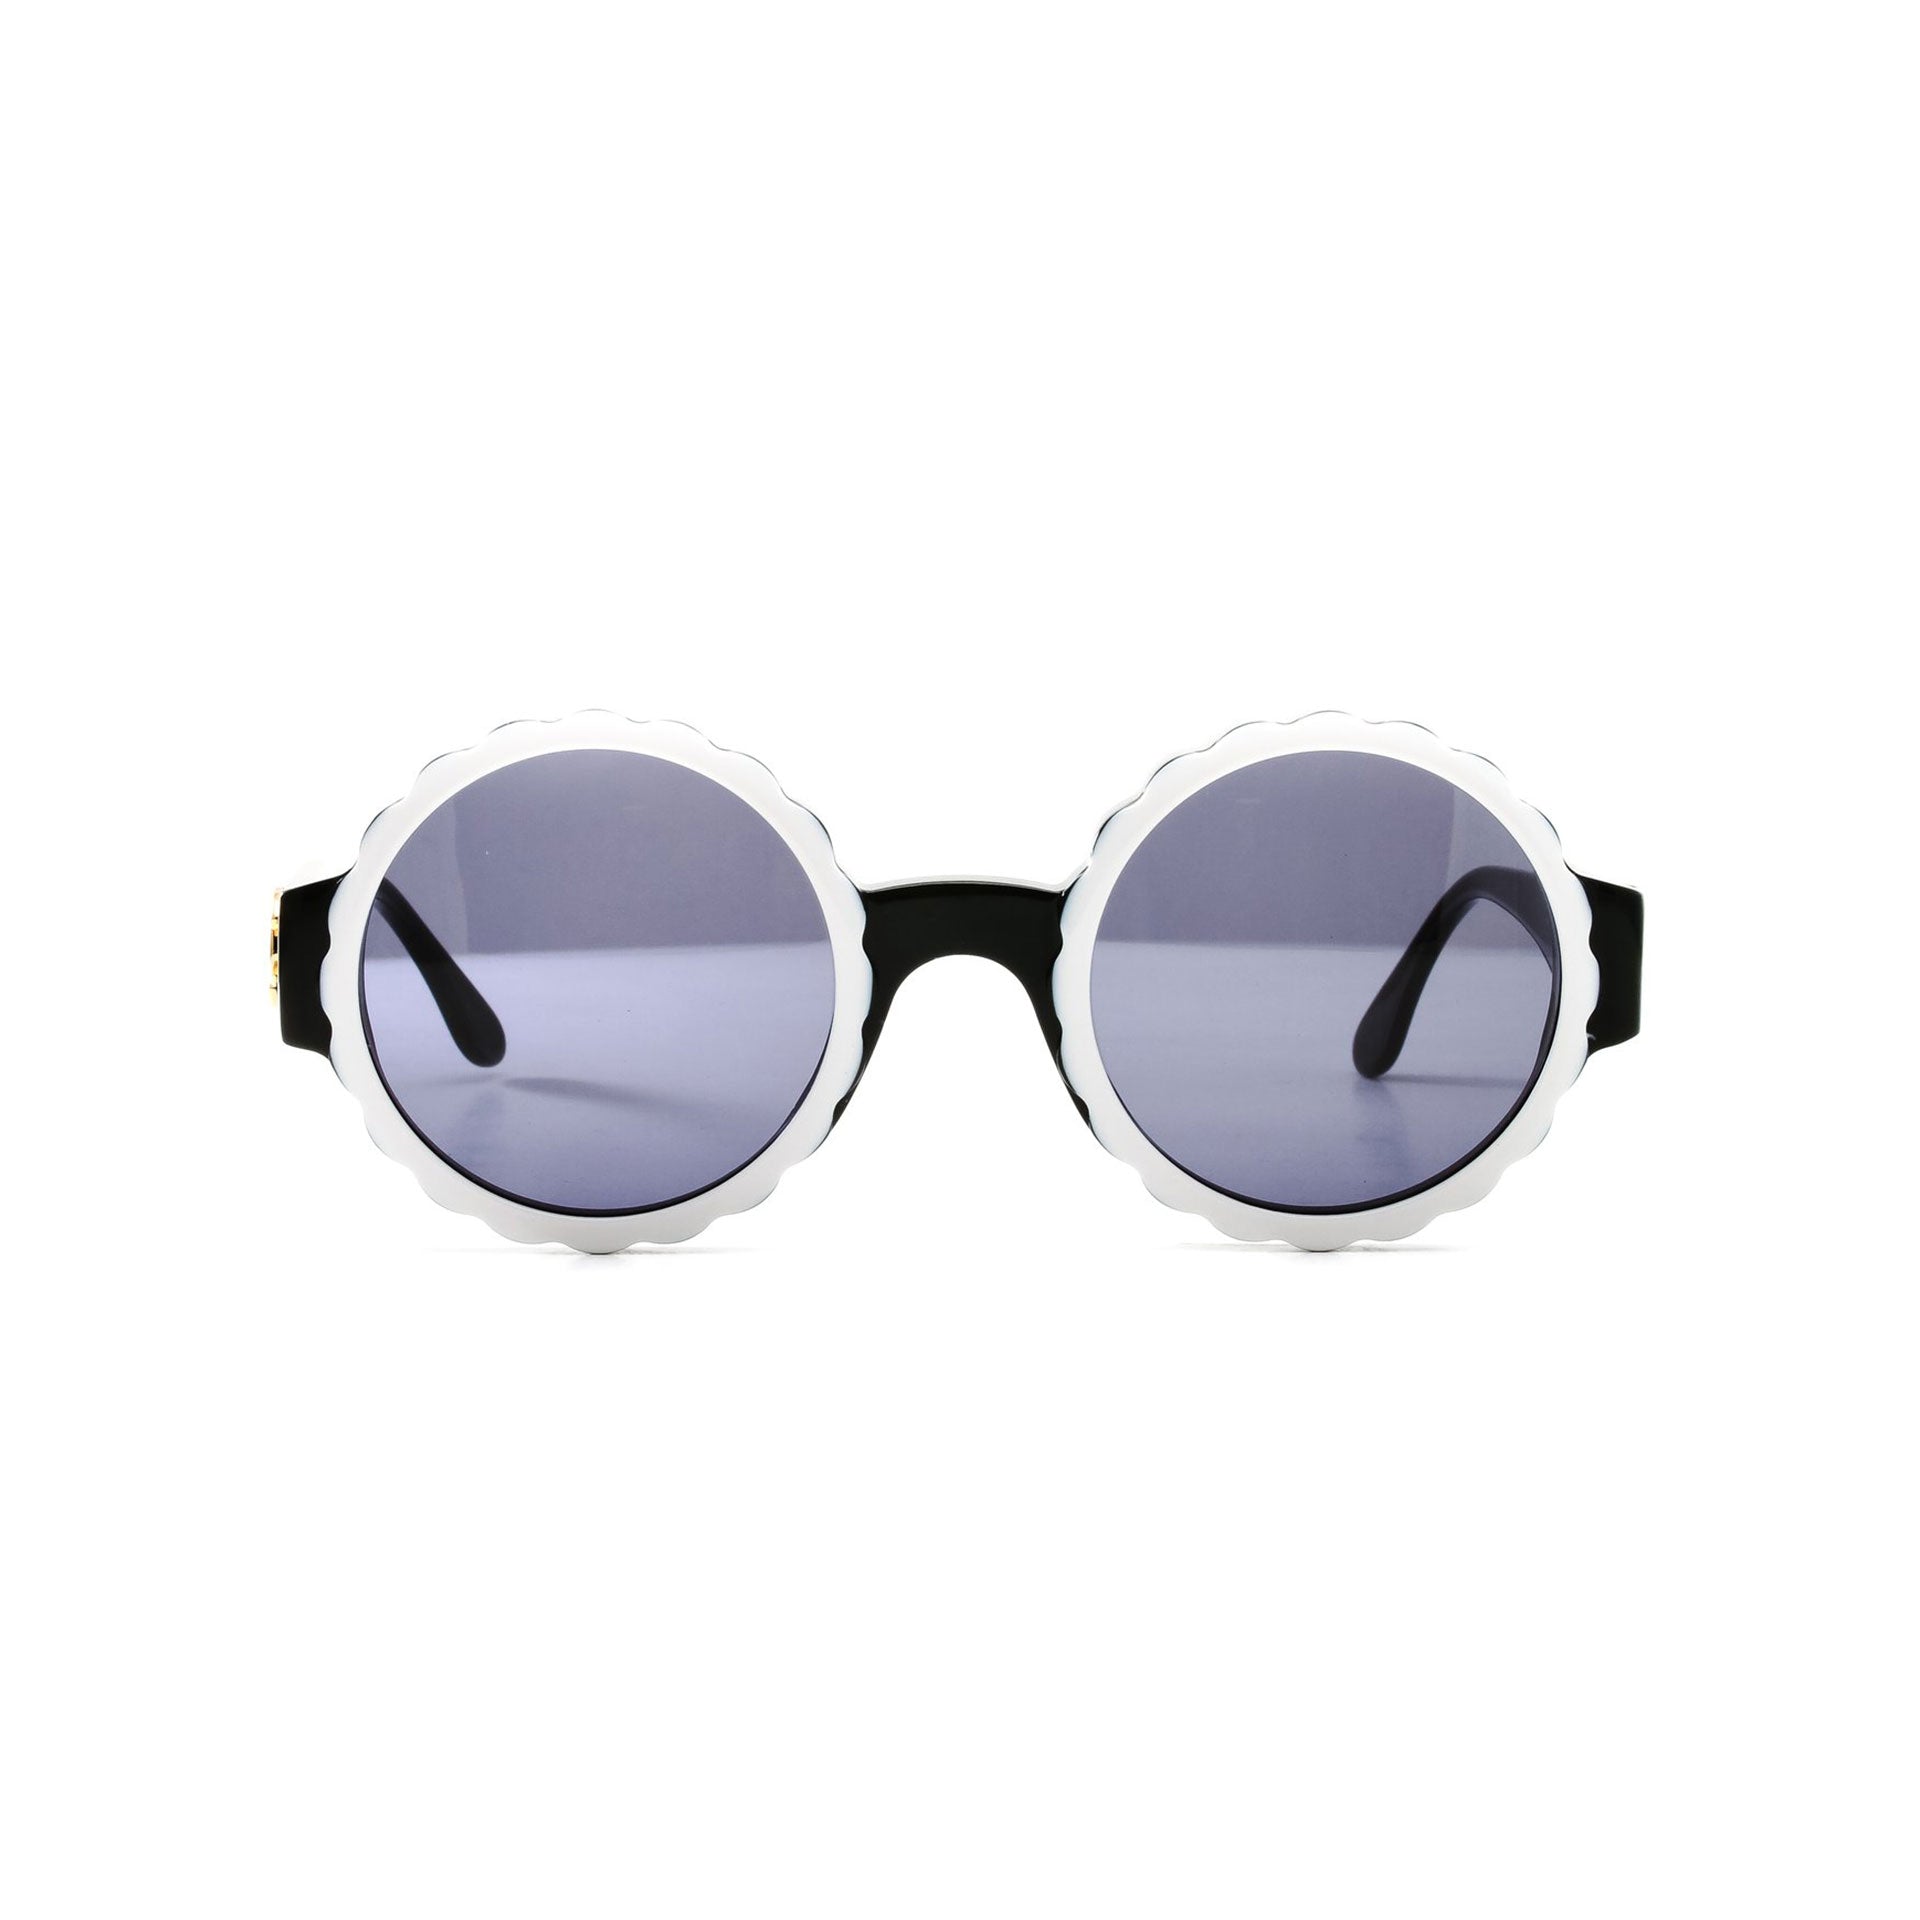 Chanel CC 1993 Round Sunglasses